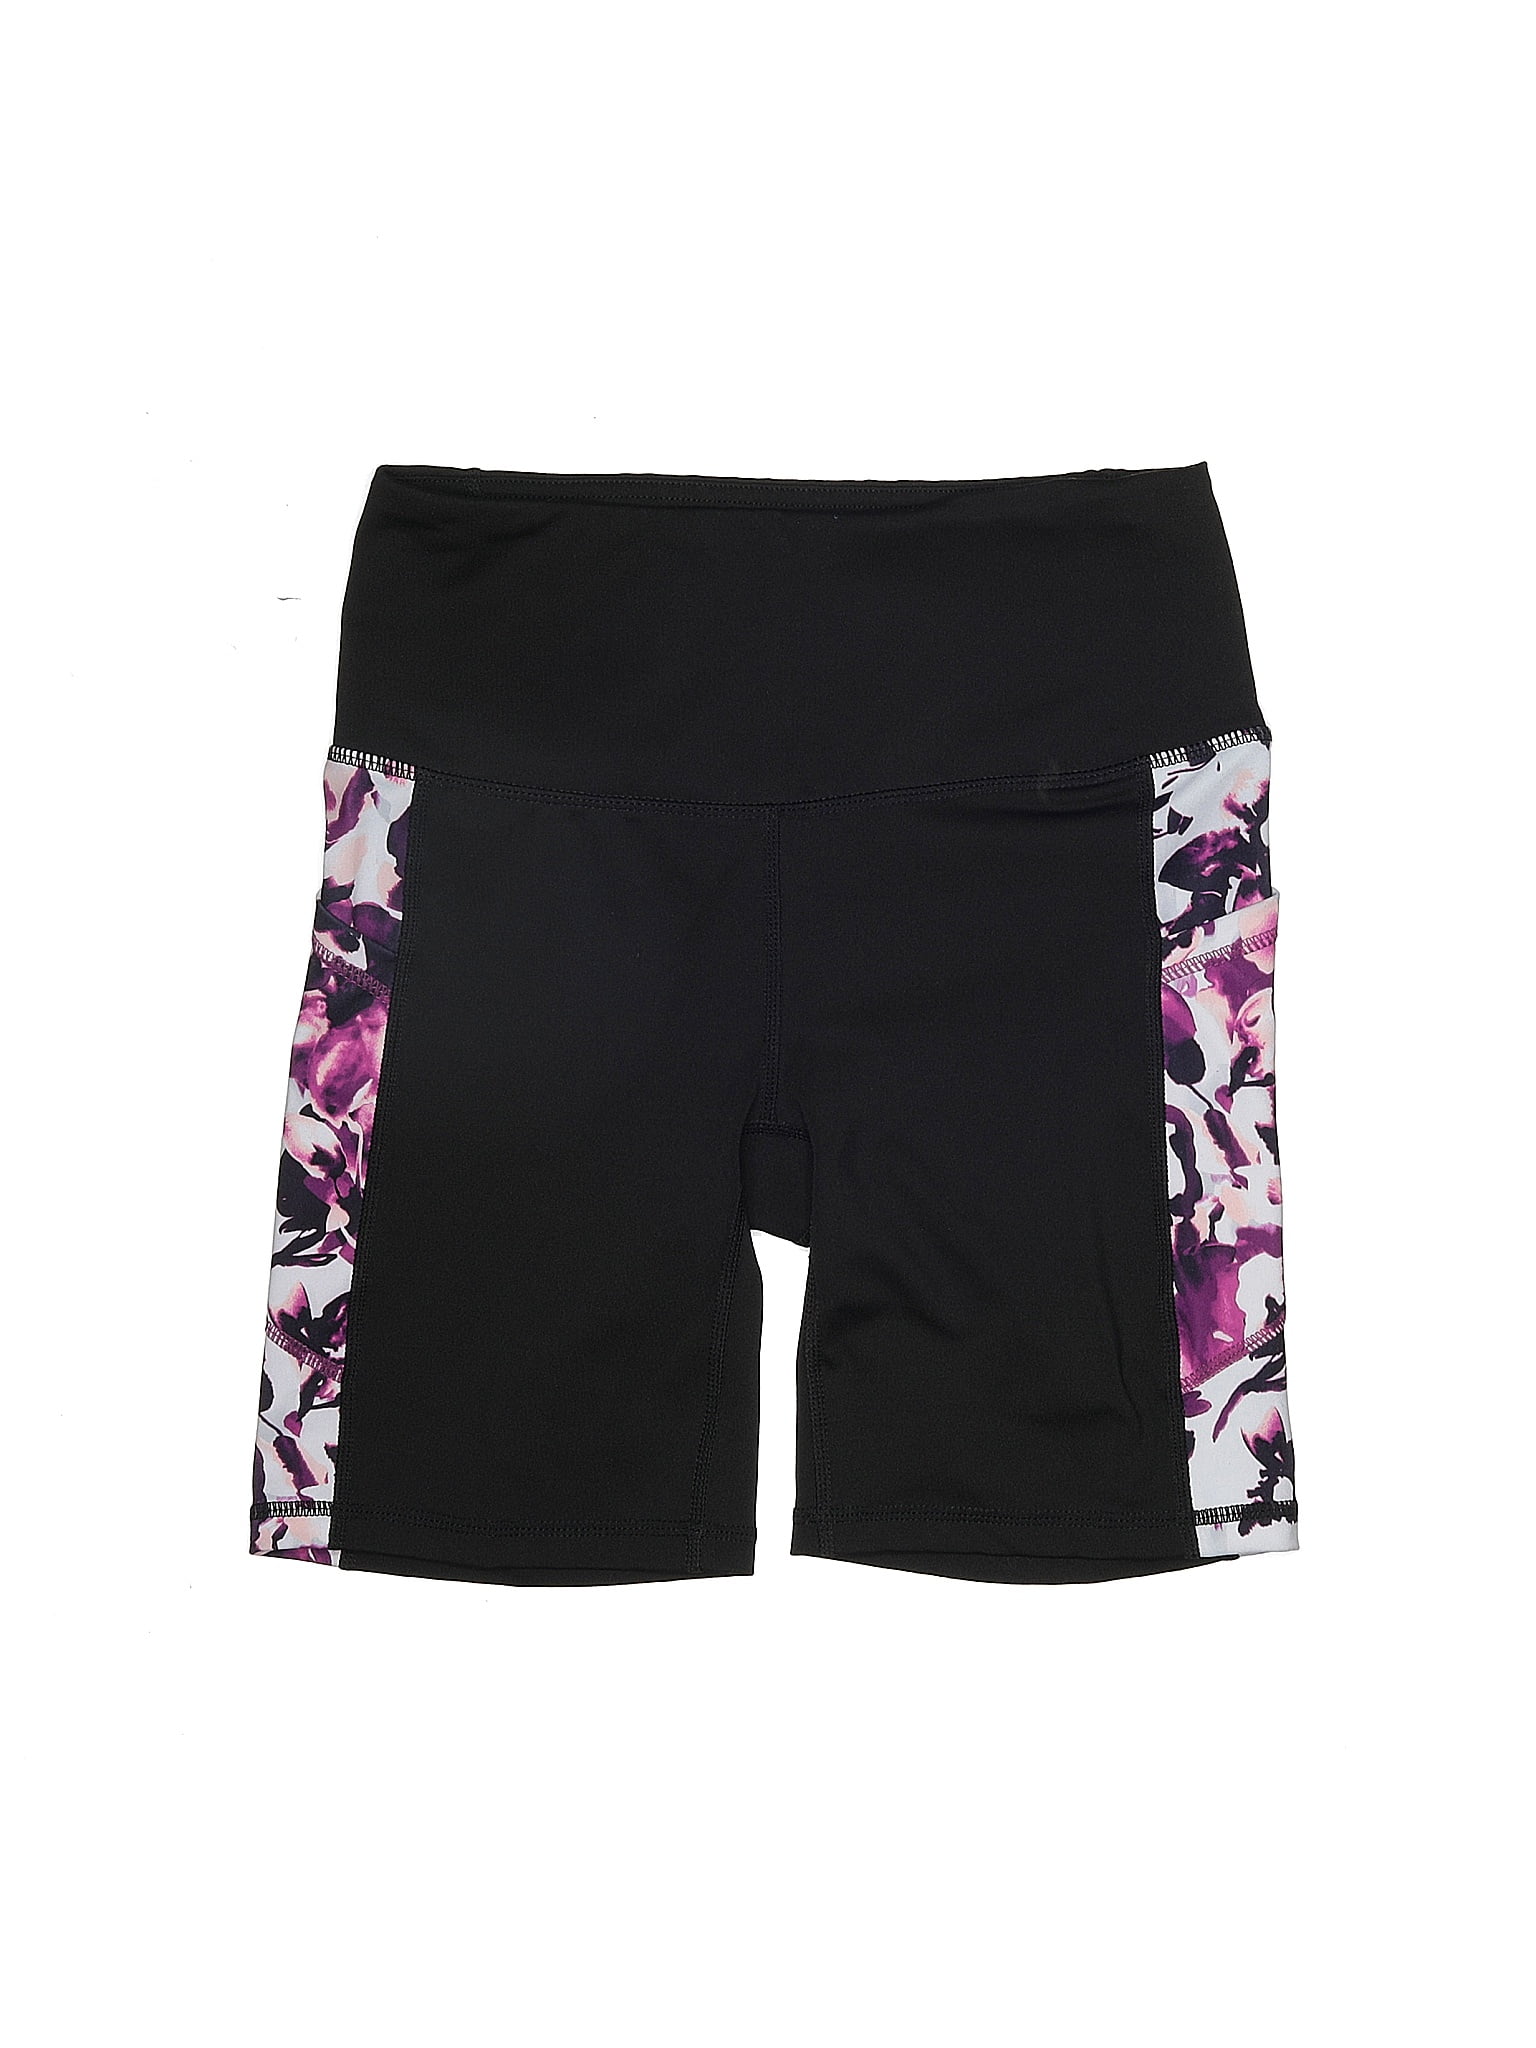 GAIAM Color Block Floral Black Athletic Shorts Size XS - 32% off